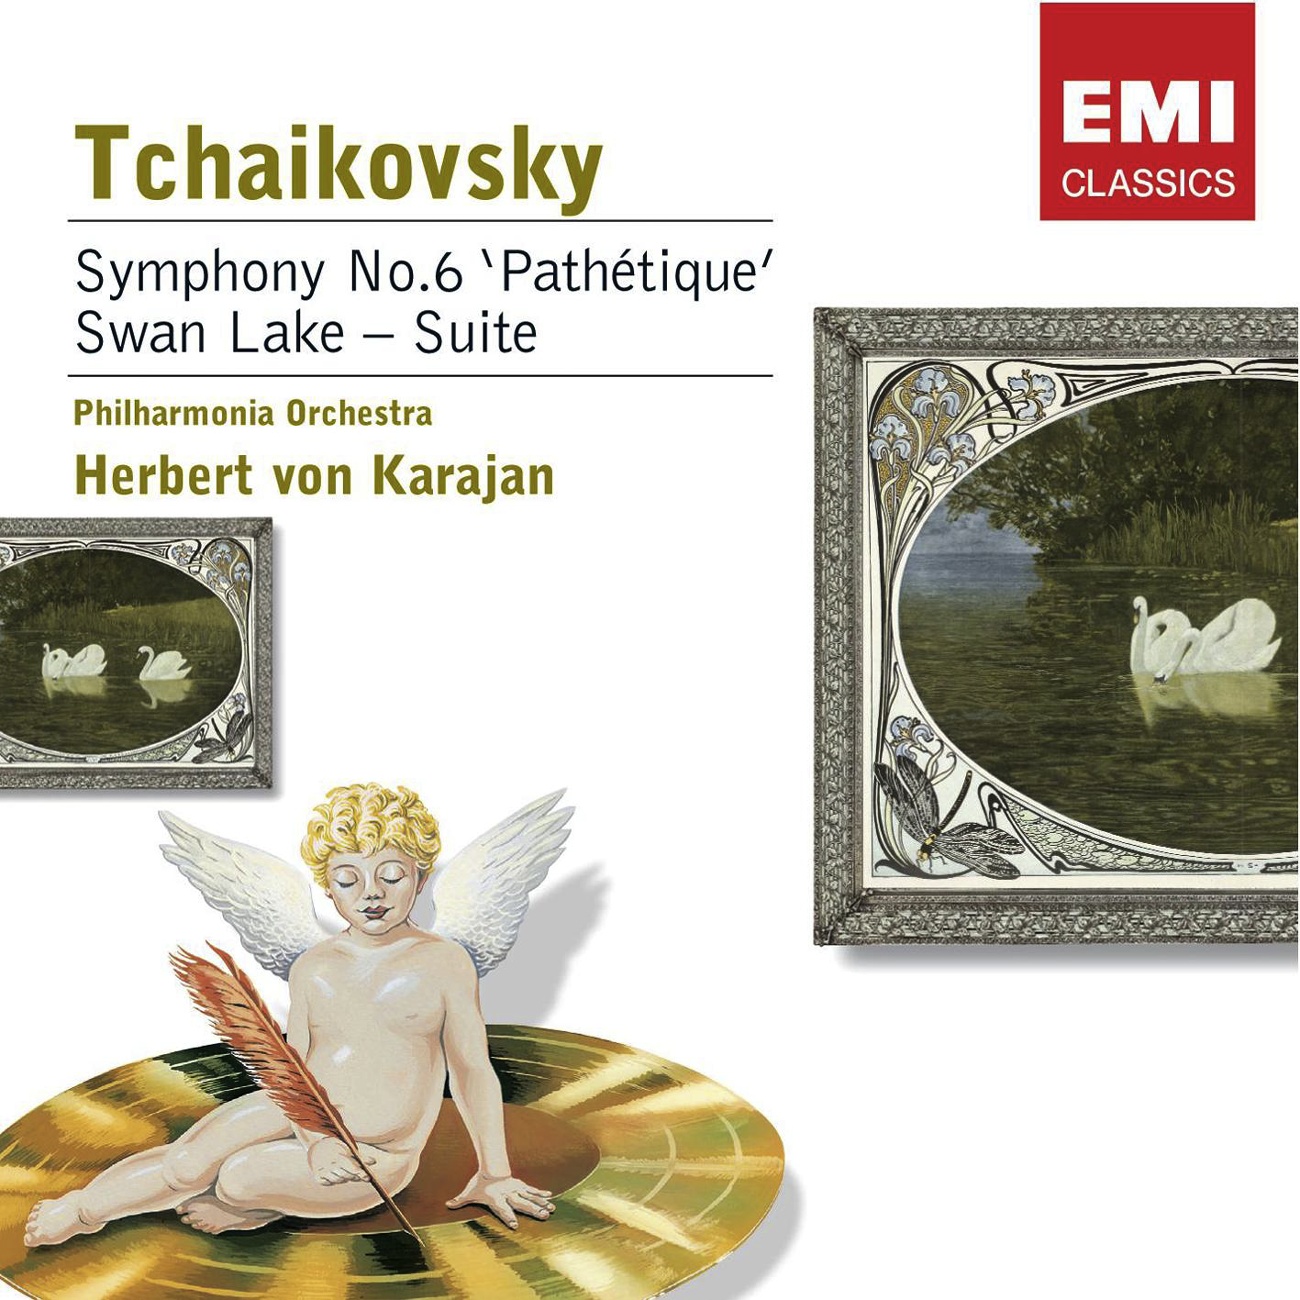 Symphony No. 6 in B minor, ' Pathe tique' Op. 74 2006 Digital Remaster: Allegro molto vivace